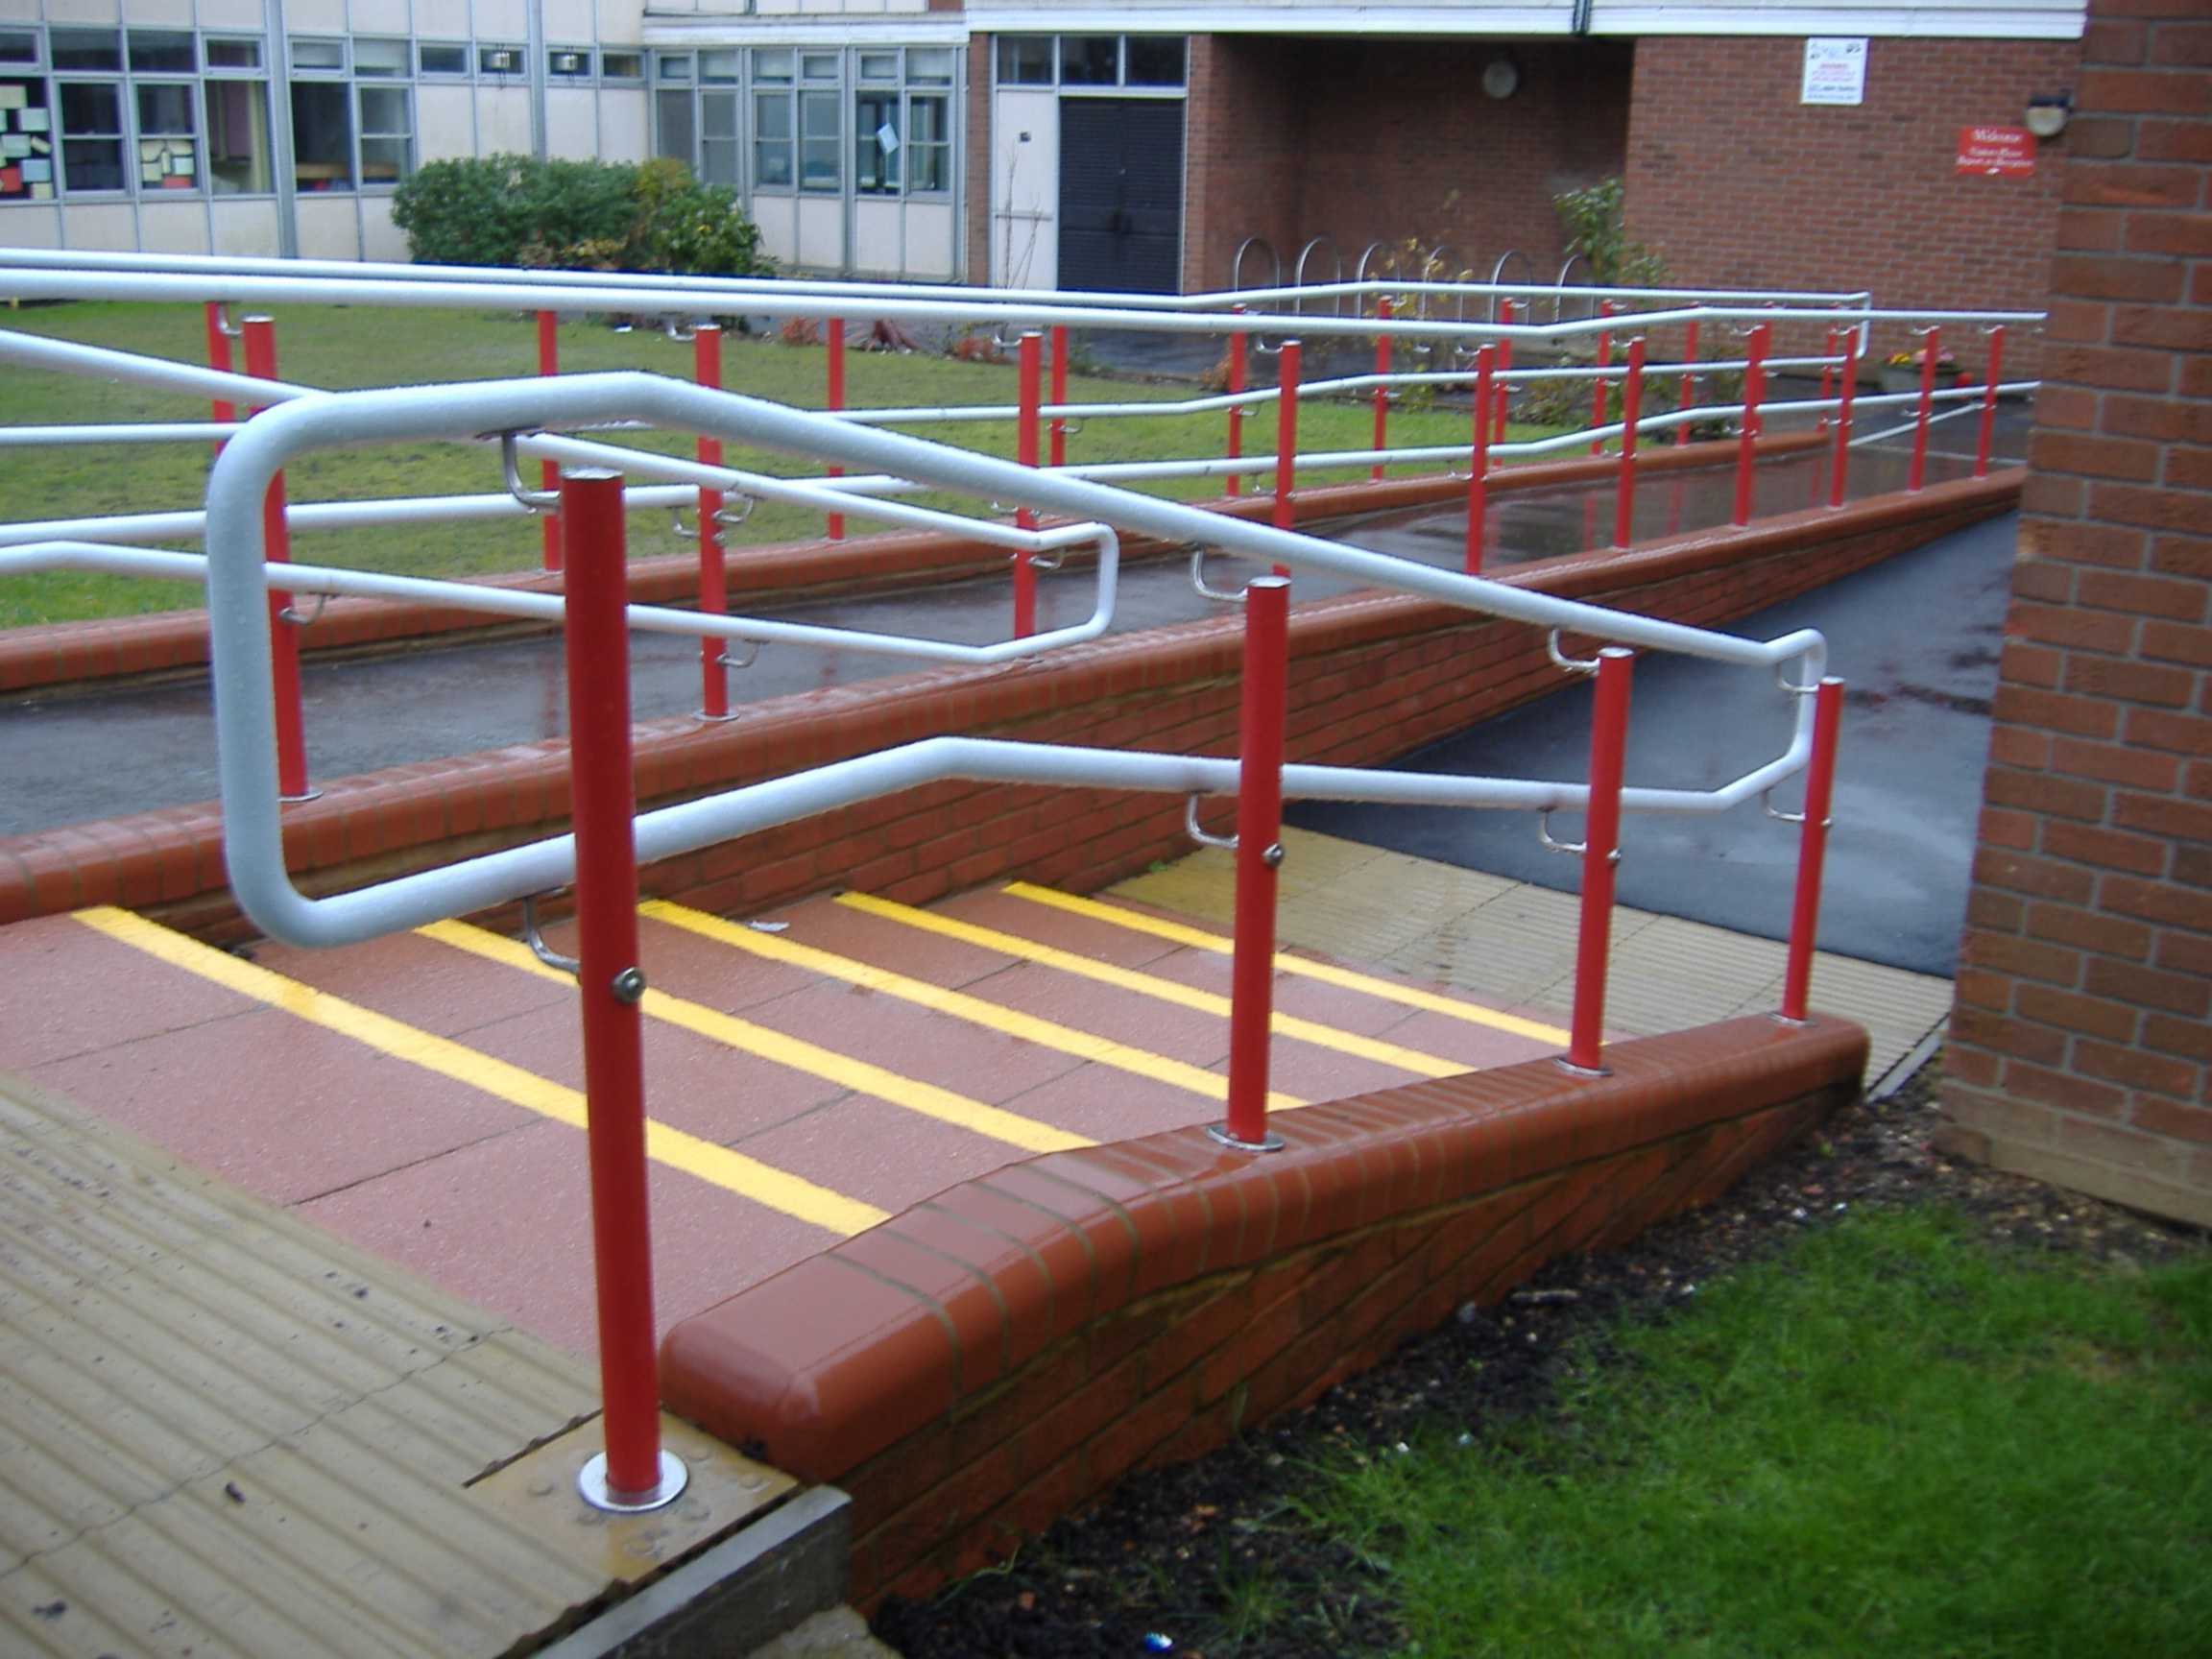 External handrail systems